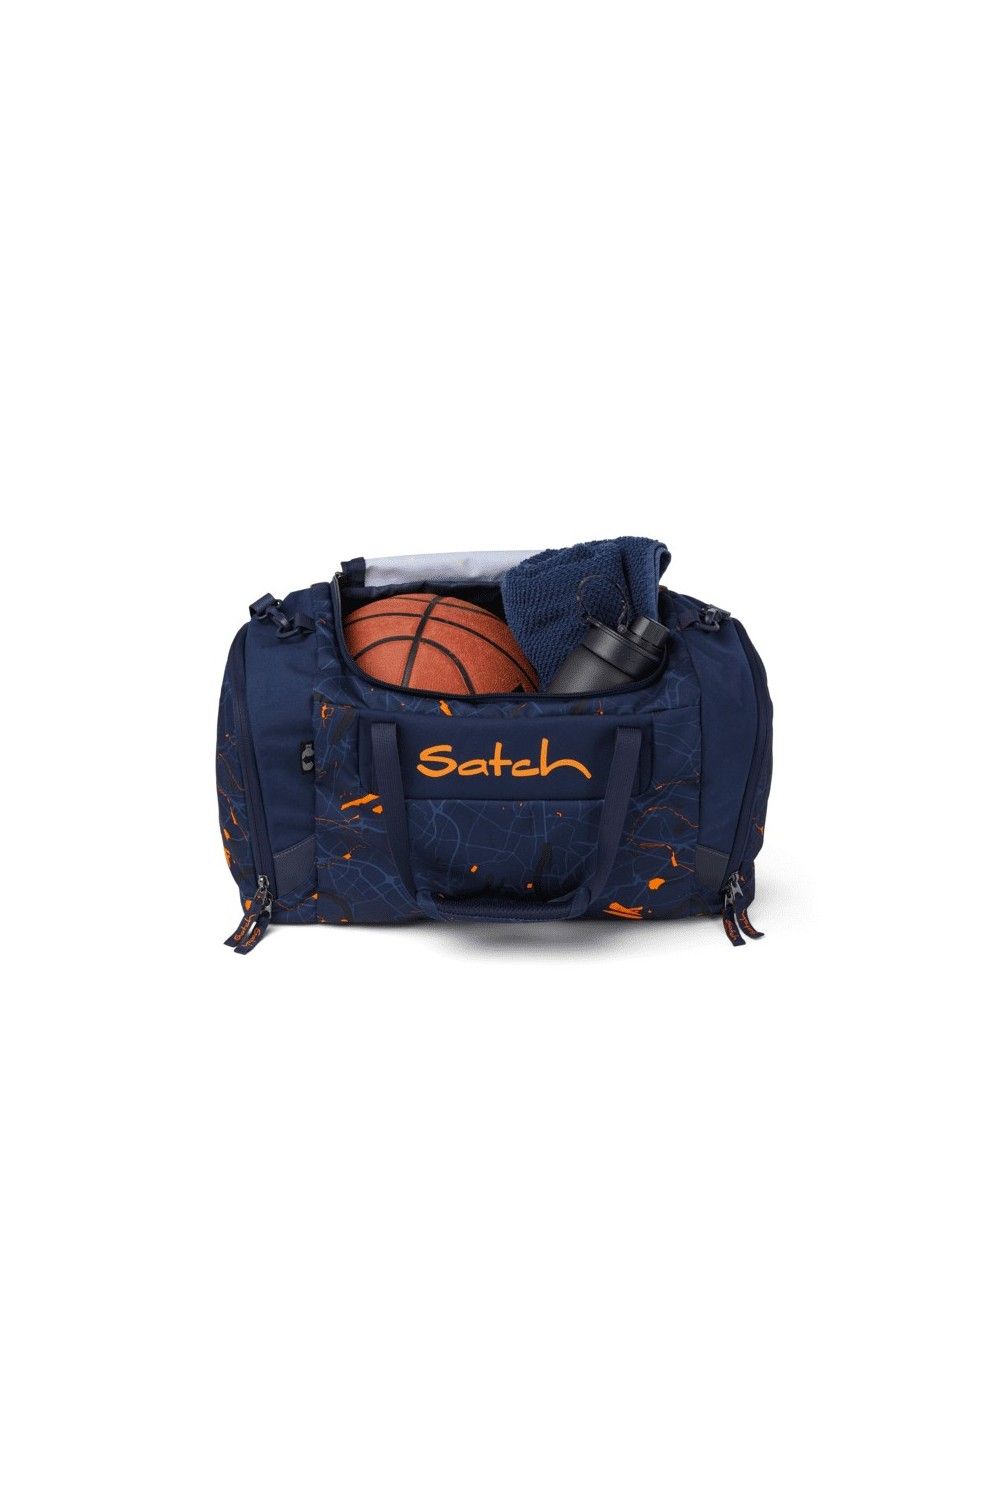 Satch sports bag Urban Journey